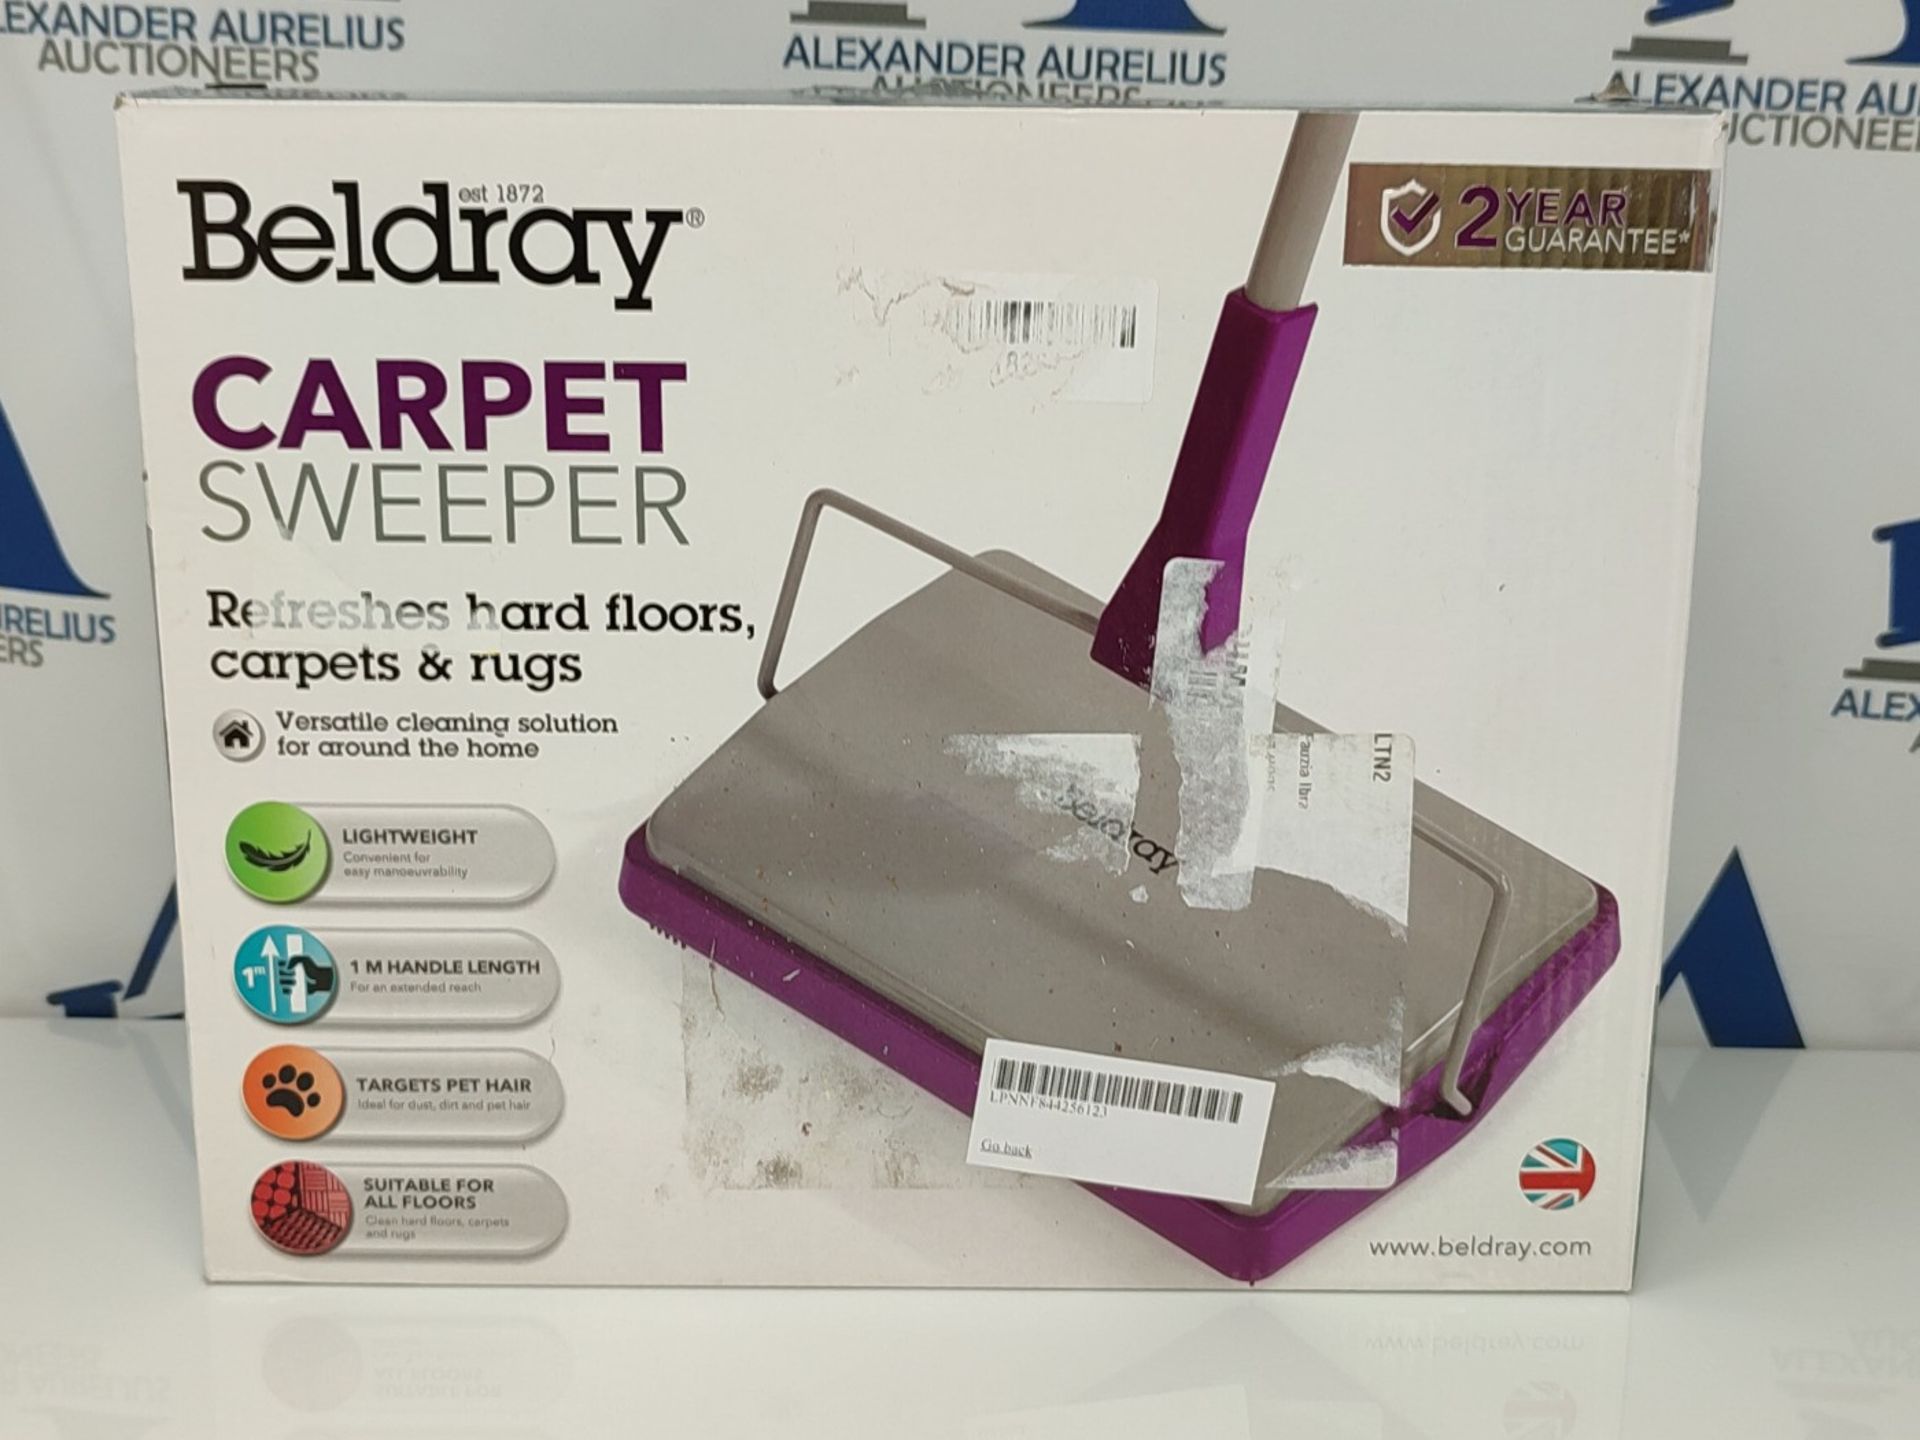 Beldray LA024855PURWK2 Carpet Sweeper - Manual Floor Cleaner, Roller for Carpet Cleani - Image 2 of 2